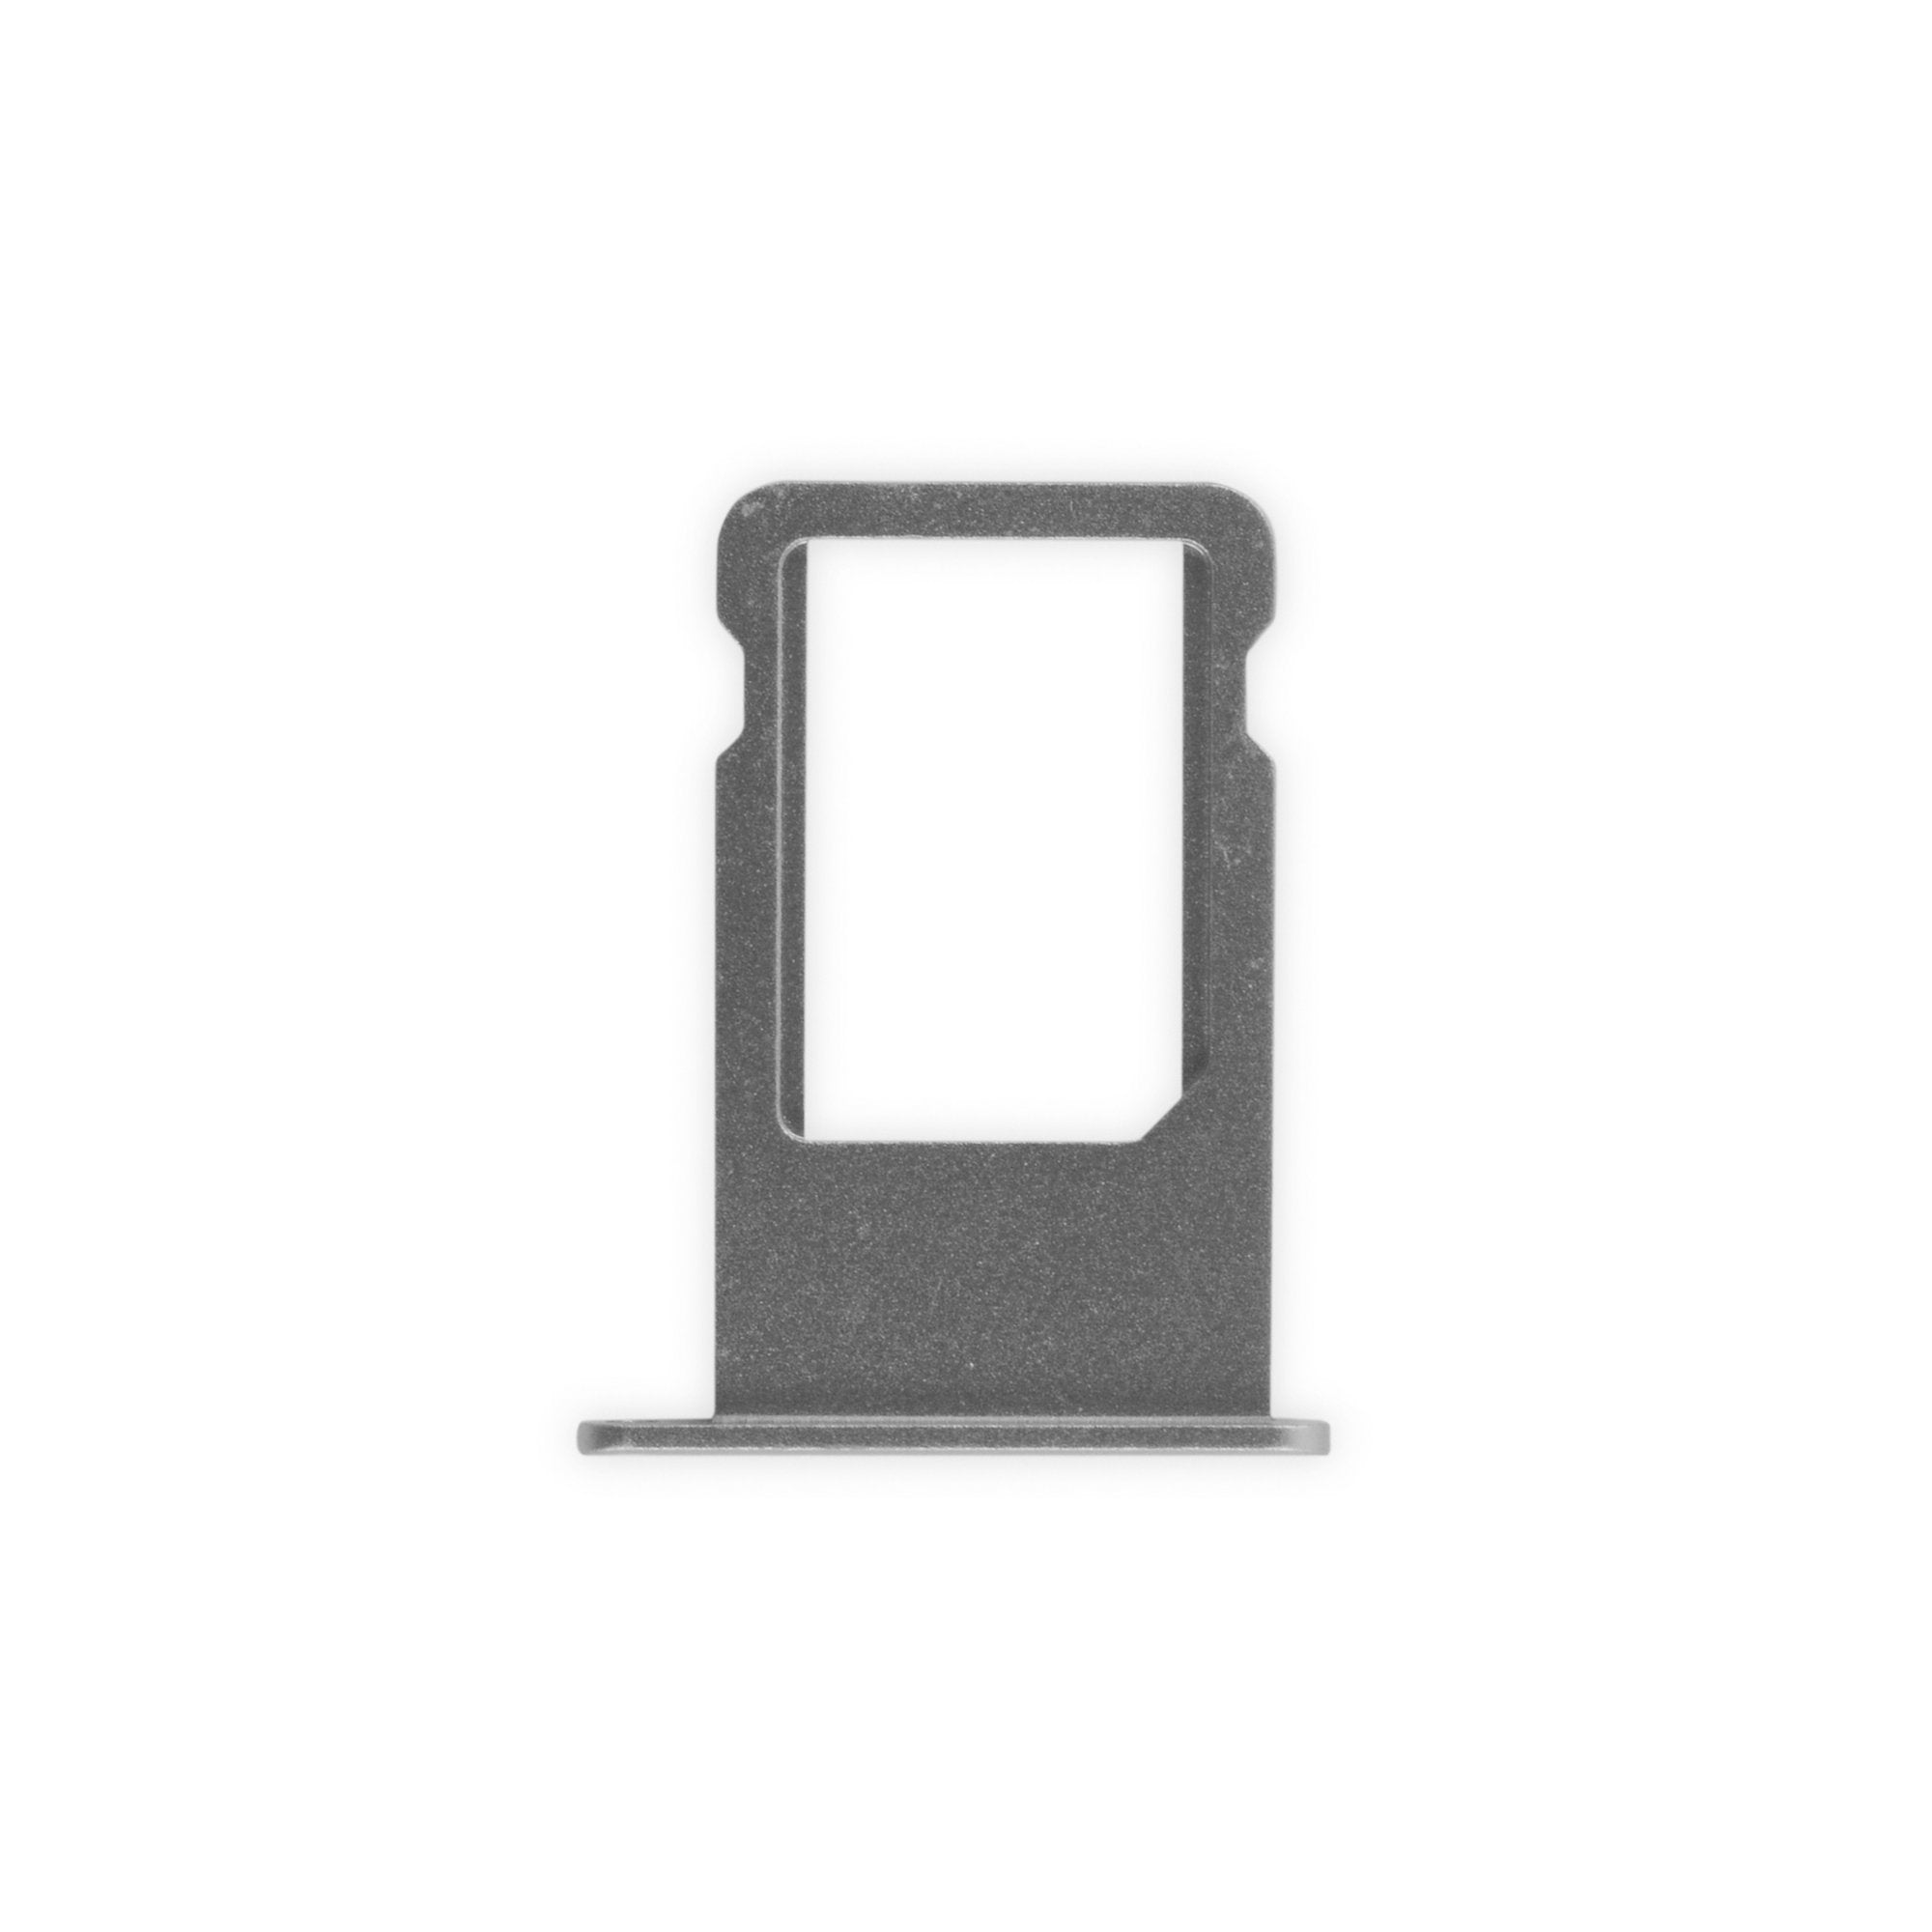 iPhone 6 Plus Nano SIM Card Tray Black New